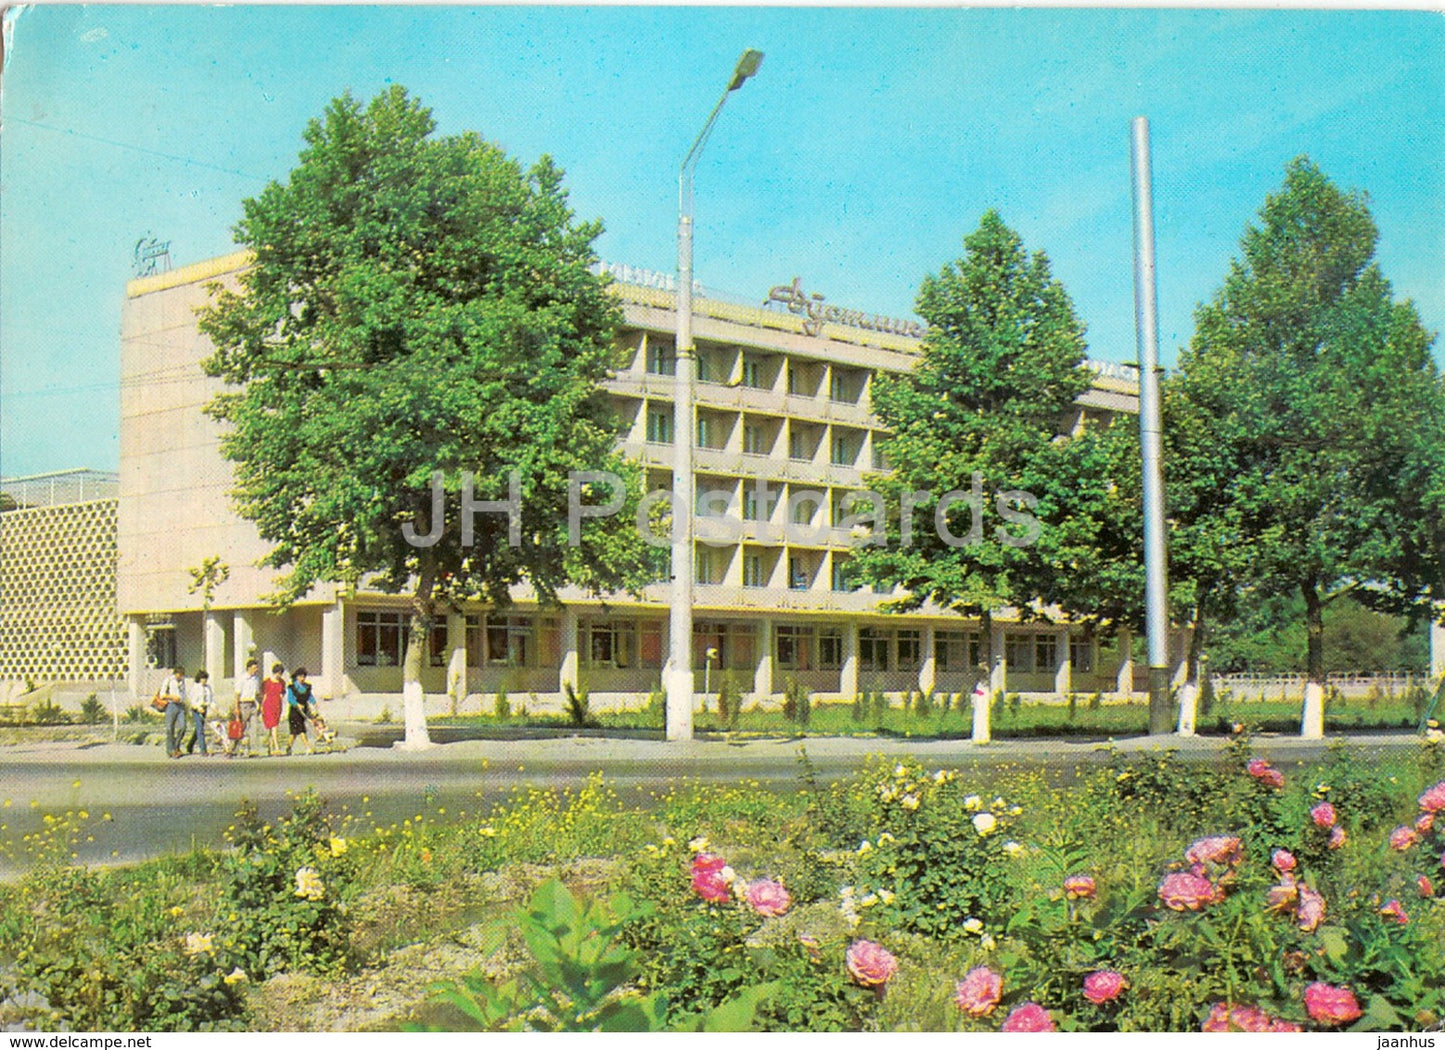 Fergana - Tourist hotel Dustlik - postal stationery - 1979 - Uzbekistan USSR - unused - JH Postcards